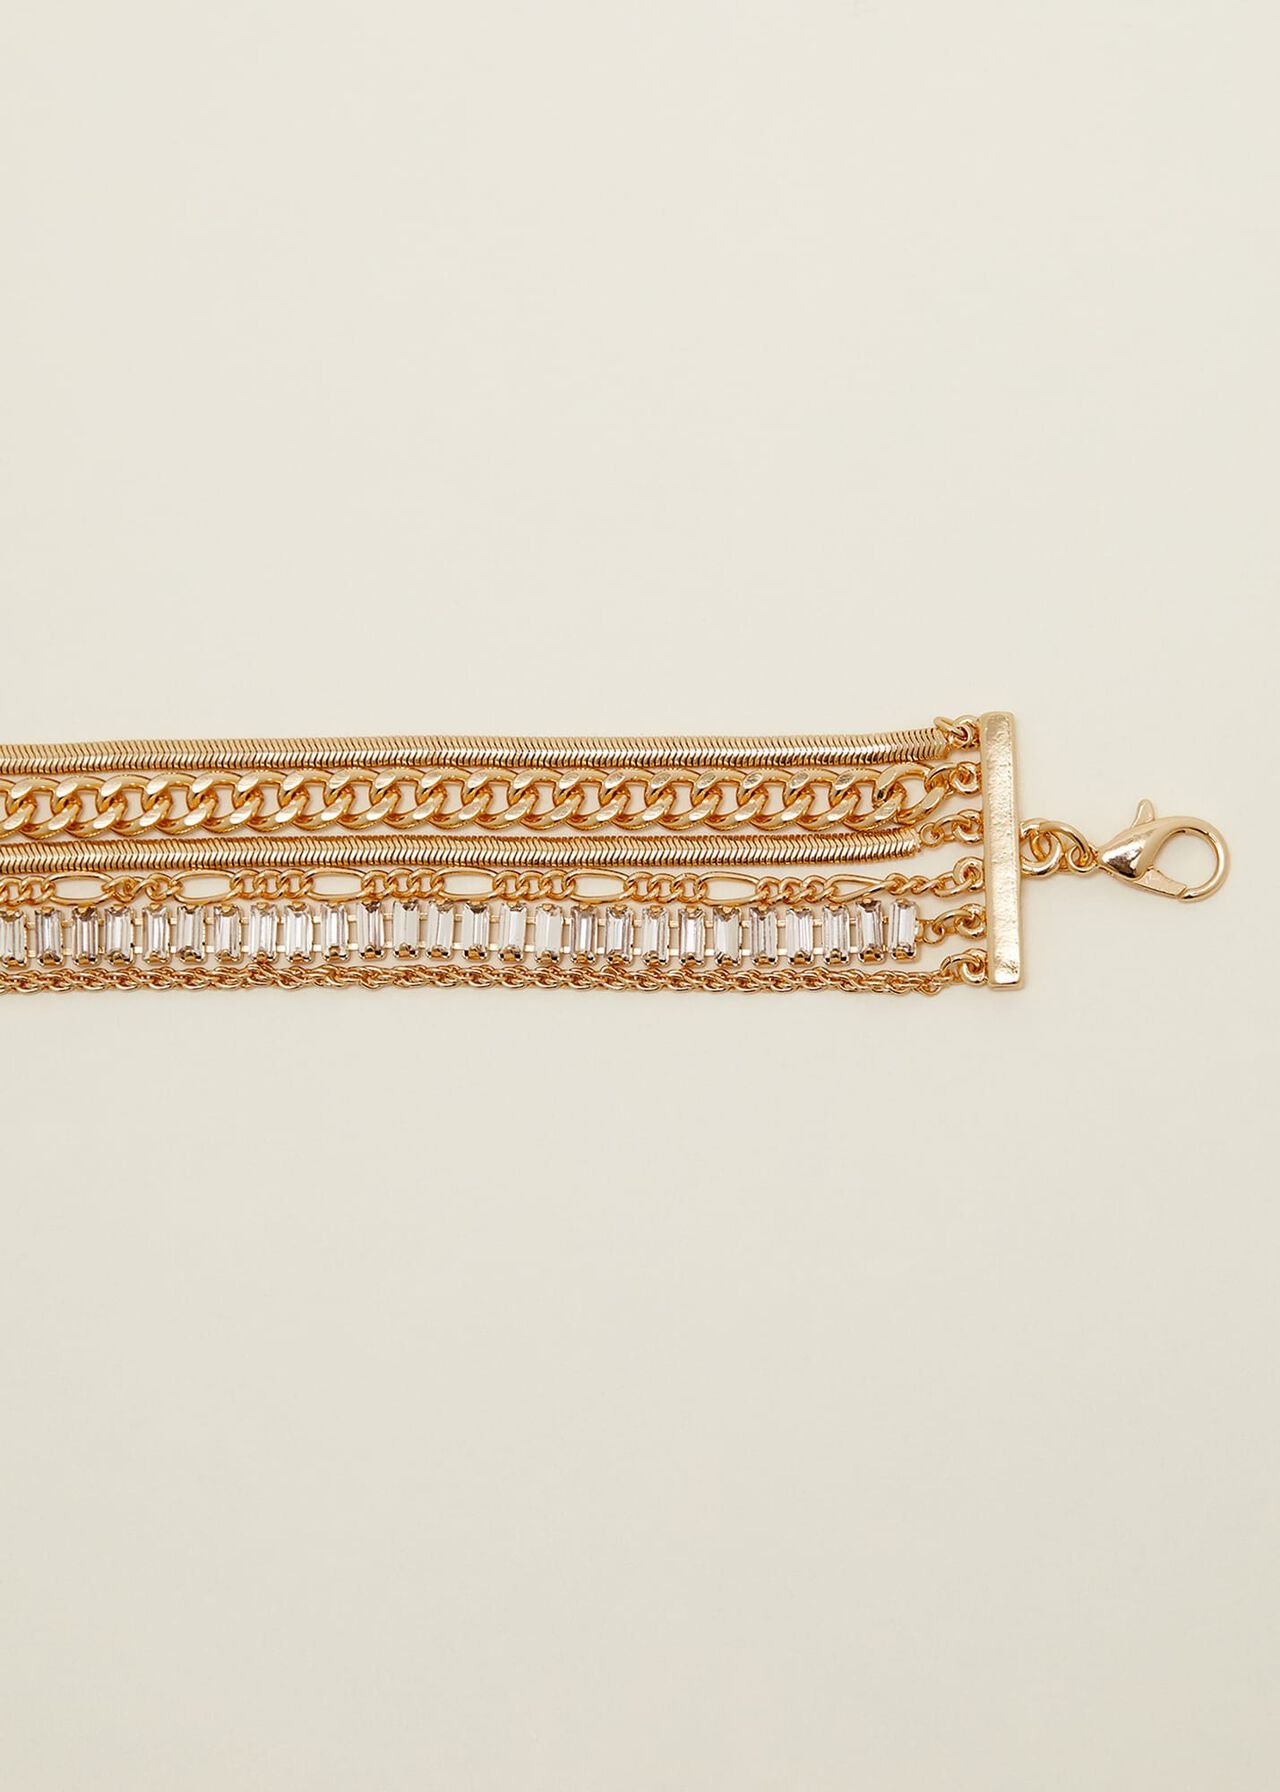 Gold Multi Chain Bracelet